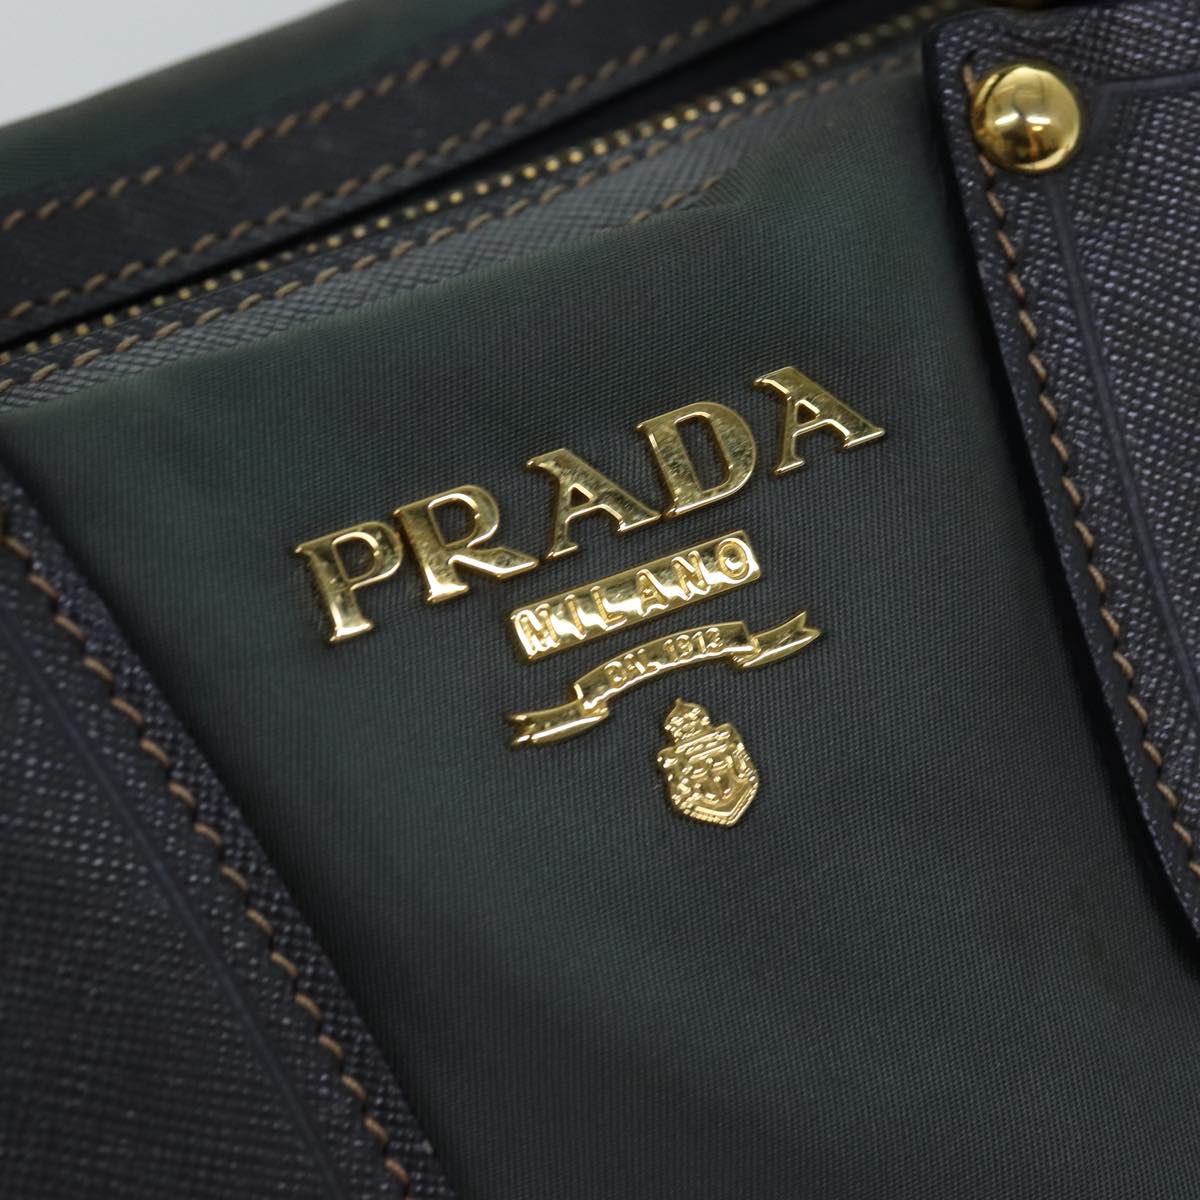 PRADA Hand Bag Nylon 2way Green Auth 76129